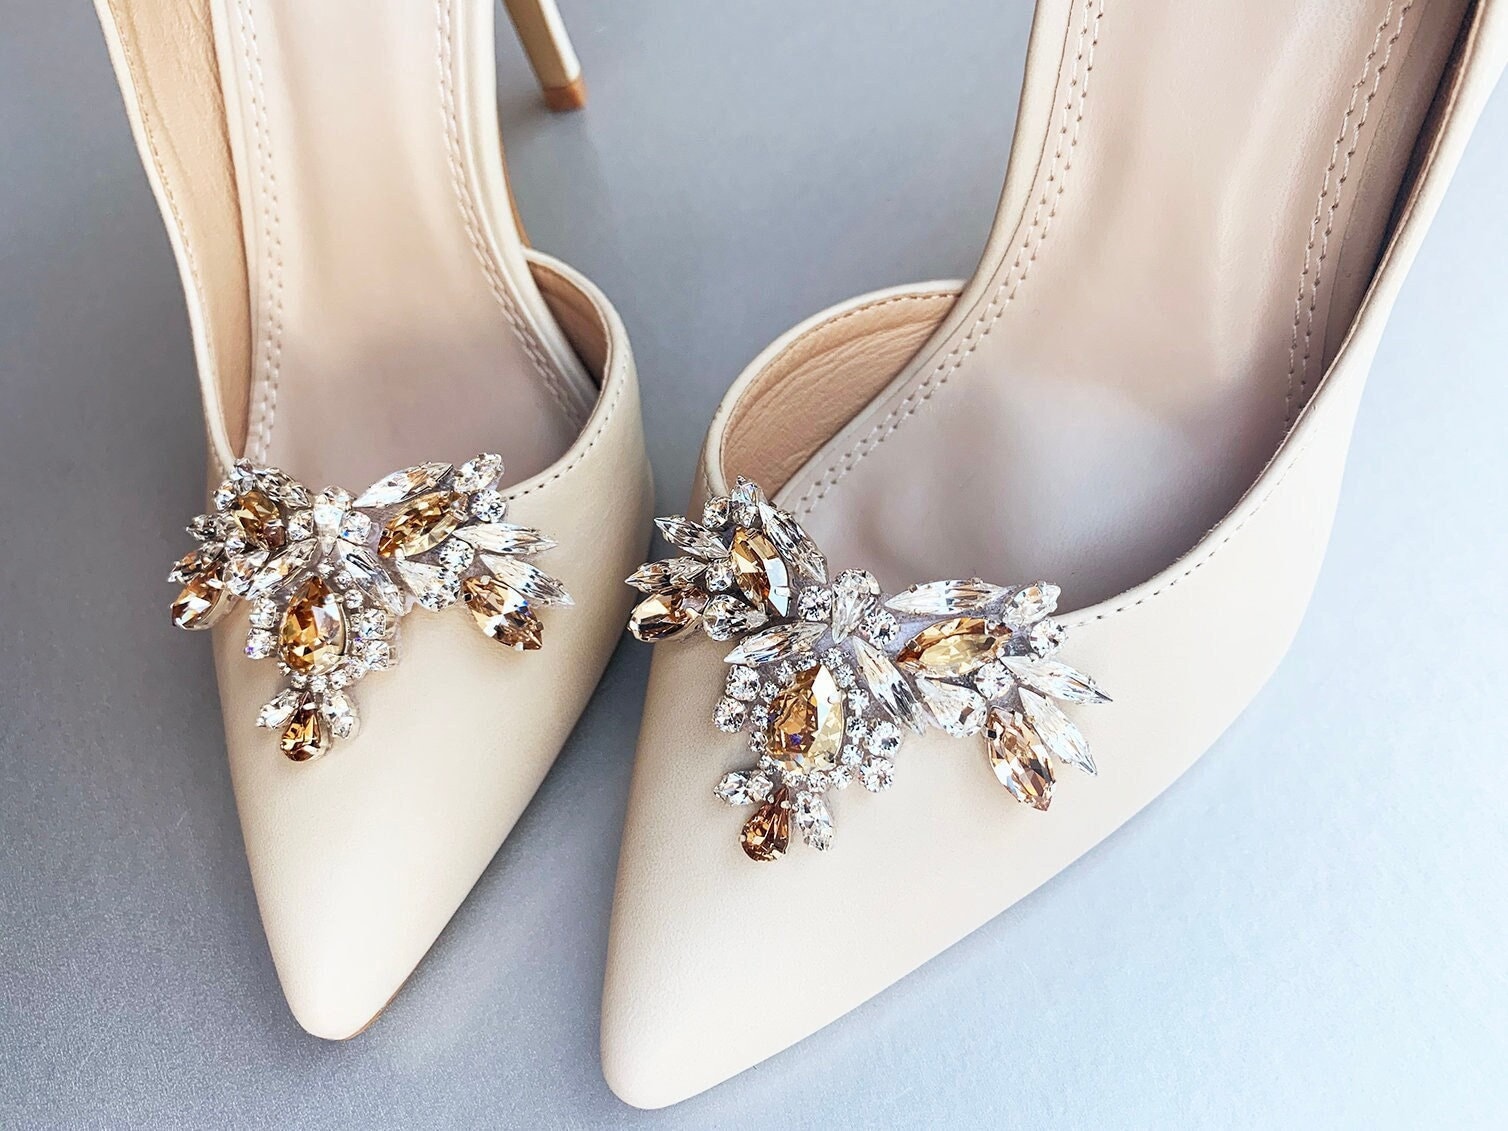 AB Rhinestone Shoe Clips - Vintage Bridal Shoe Jewelry, Musi